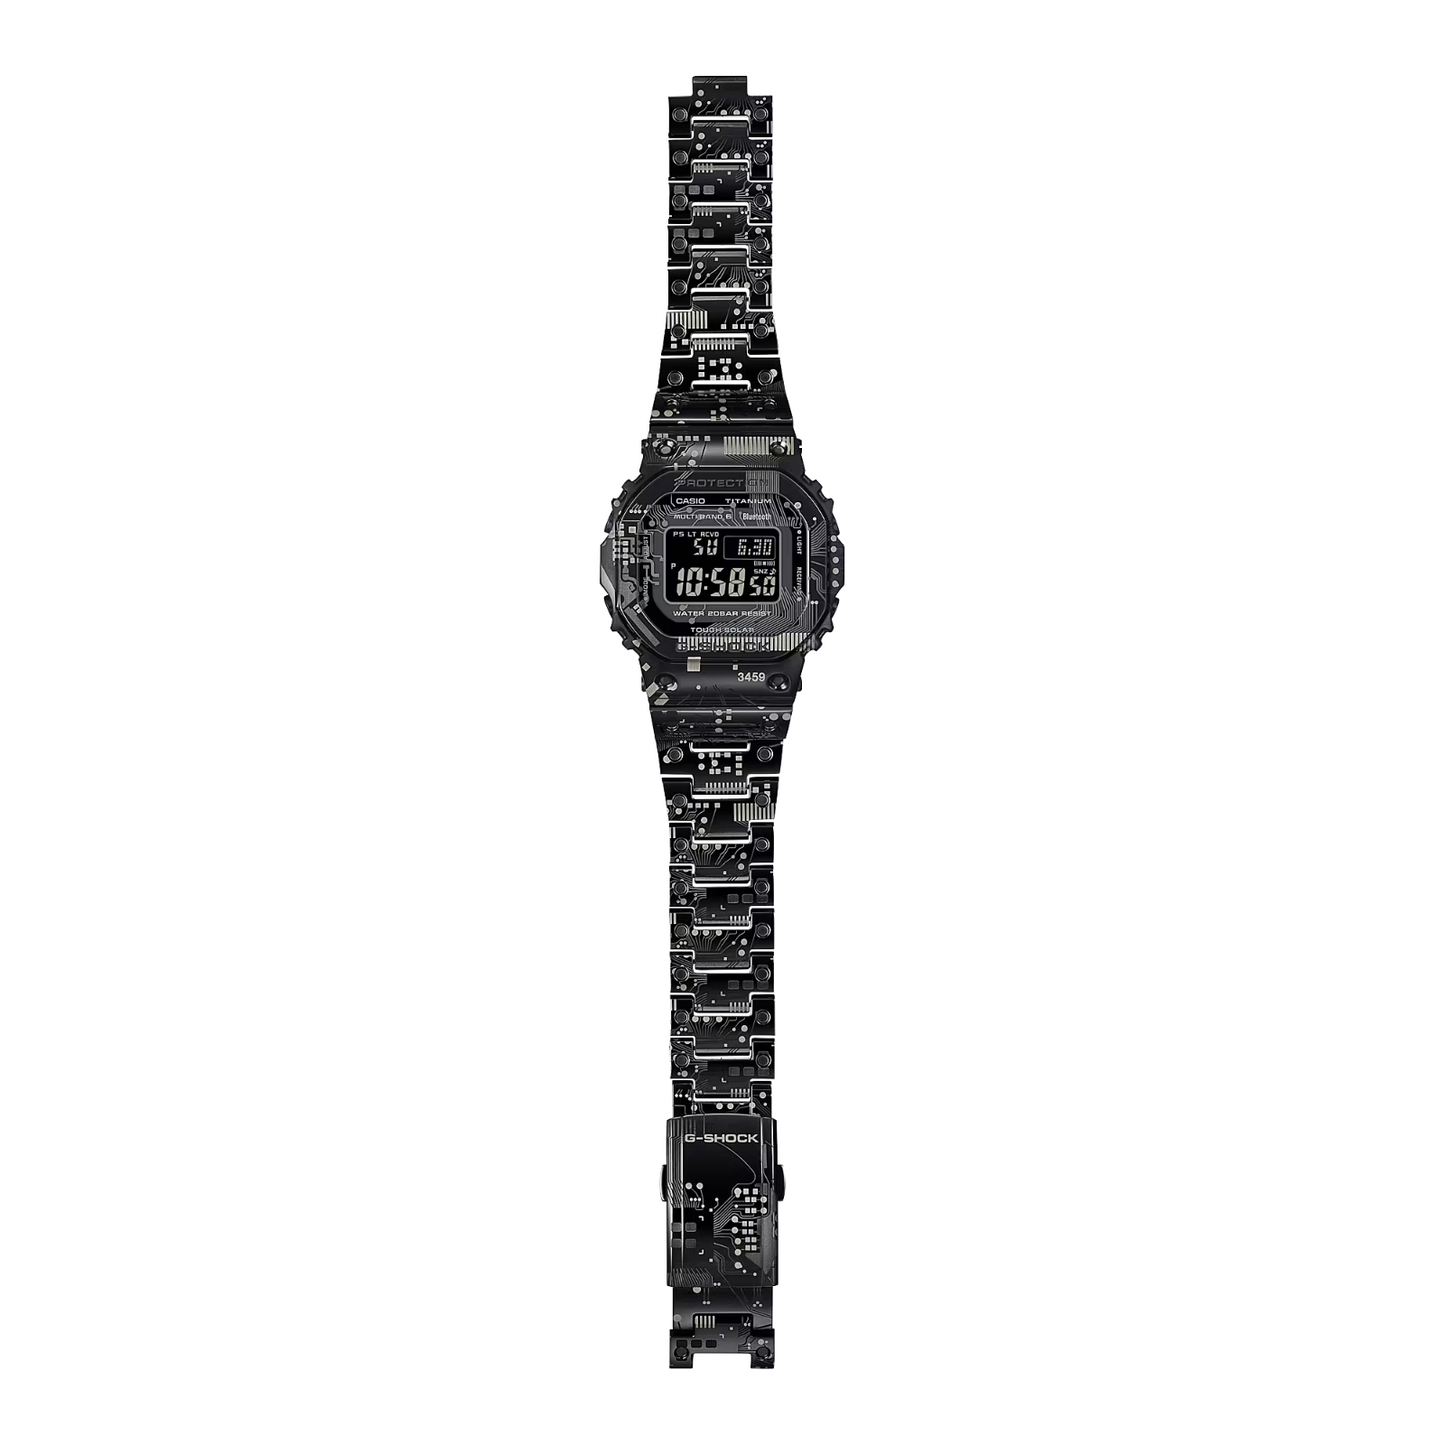 Casio G-Shock Full Titanium Limited Solar Watch GMW-B5000TCC-1